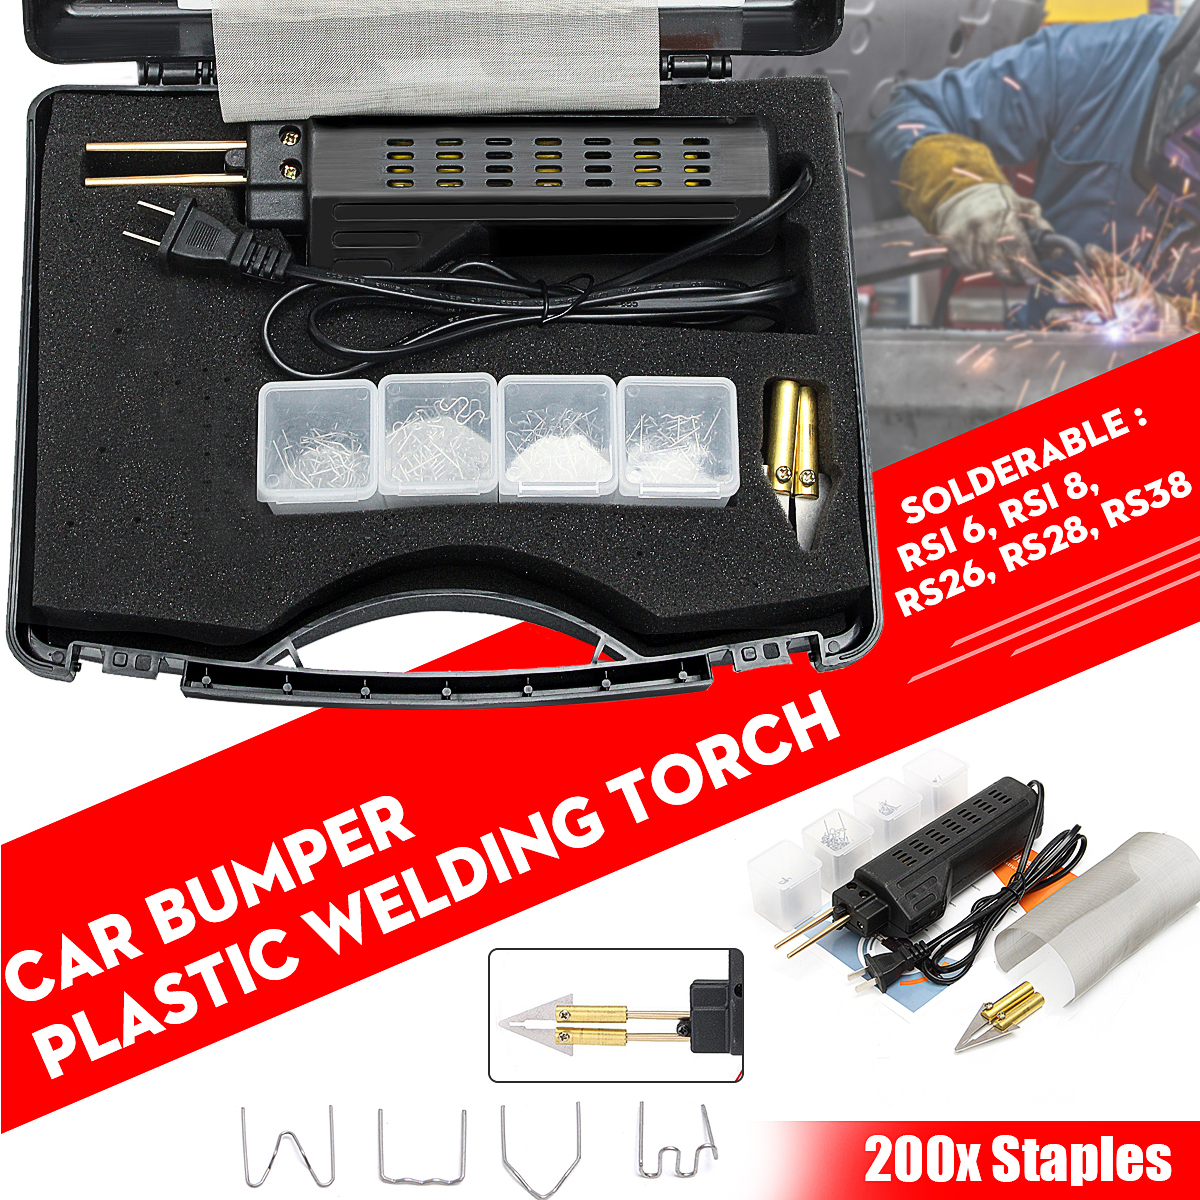 Hot-Stapler-Car-Bumper-Fairing-Repair-Tool-Nail-Mender-Plastic-Welders-Cut-Connect-Welding-Machine-1185133-1